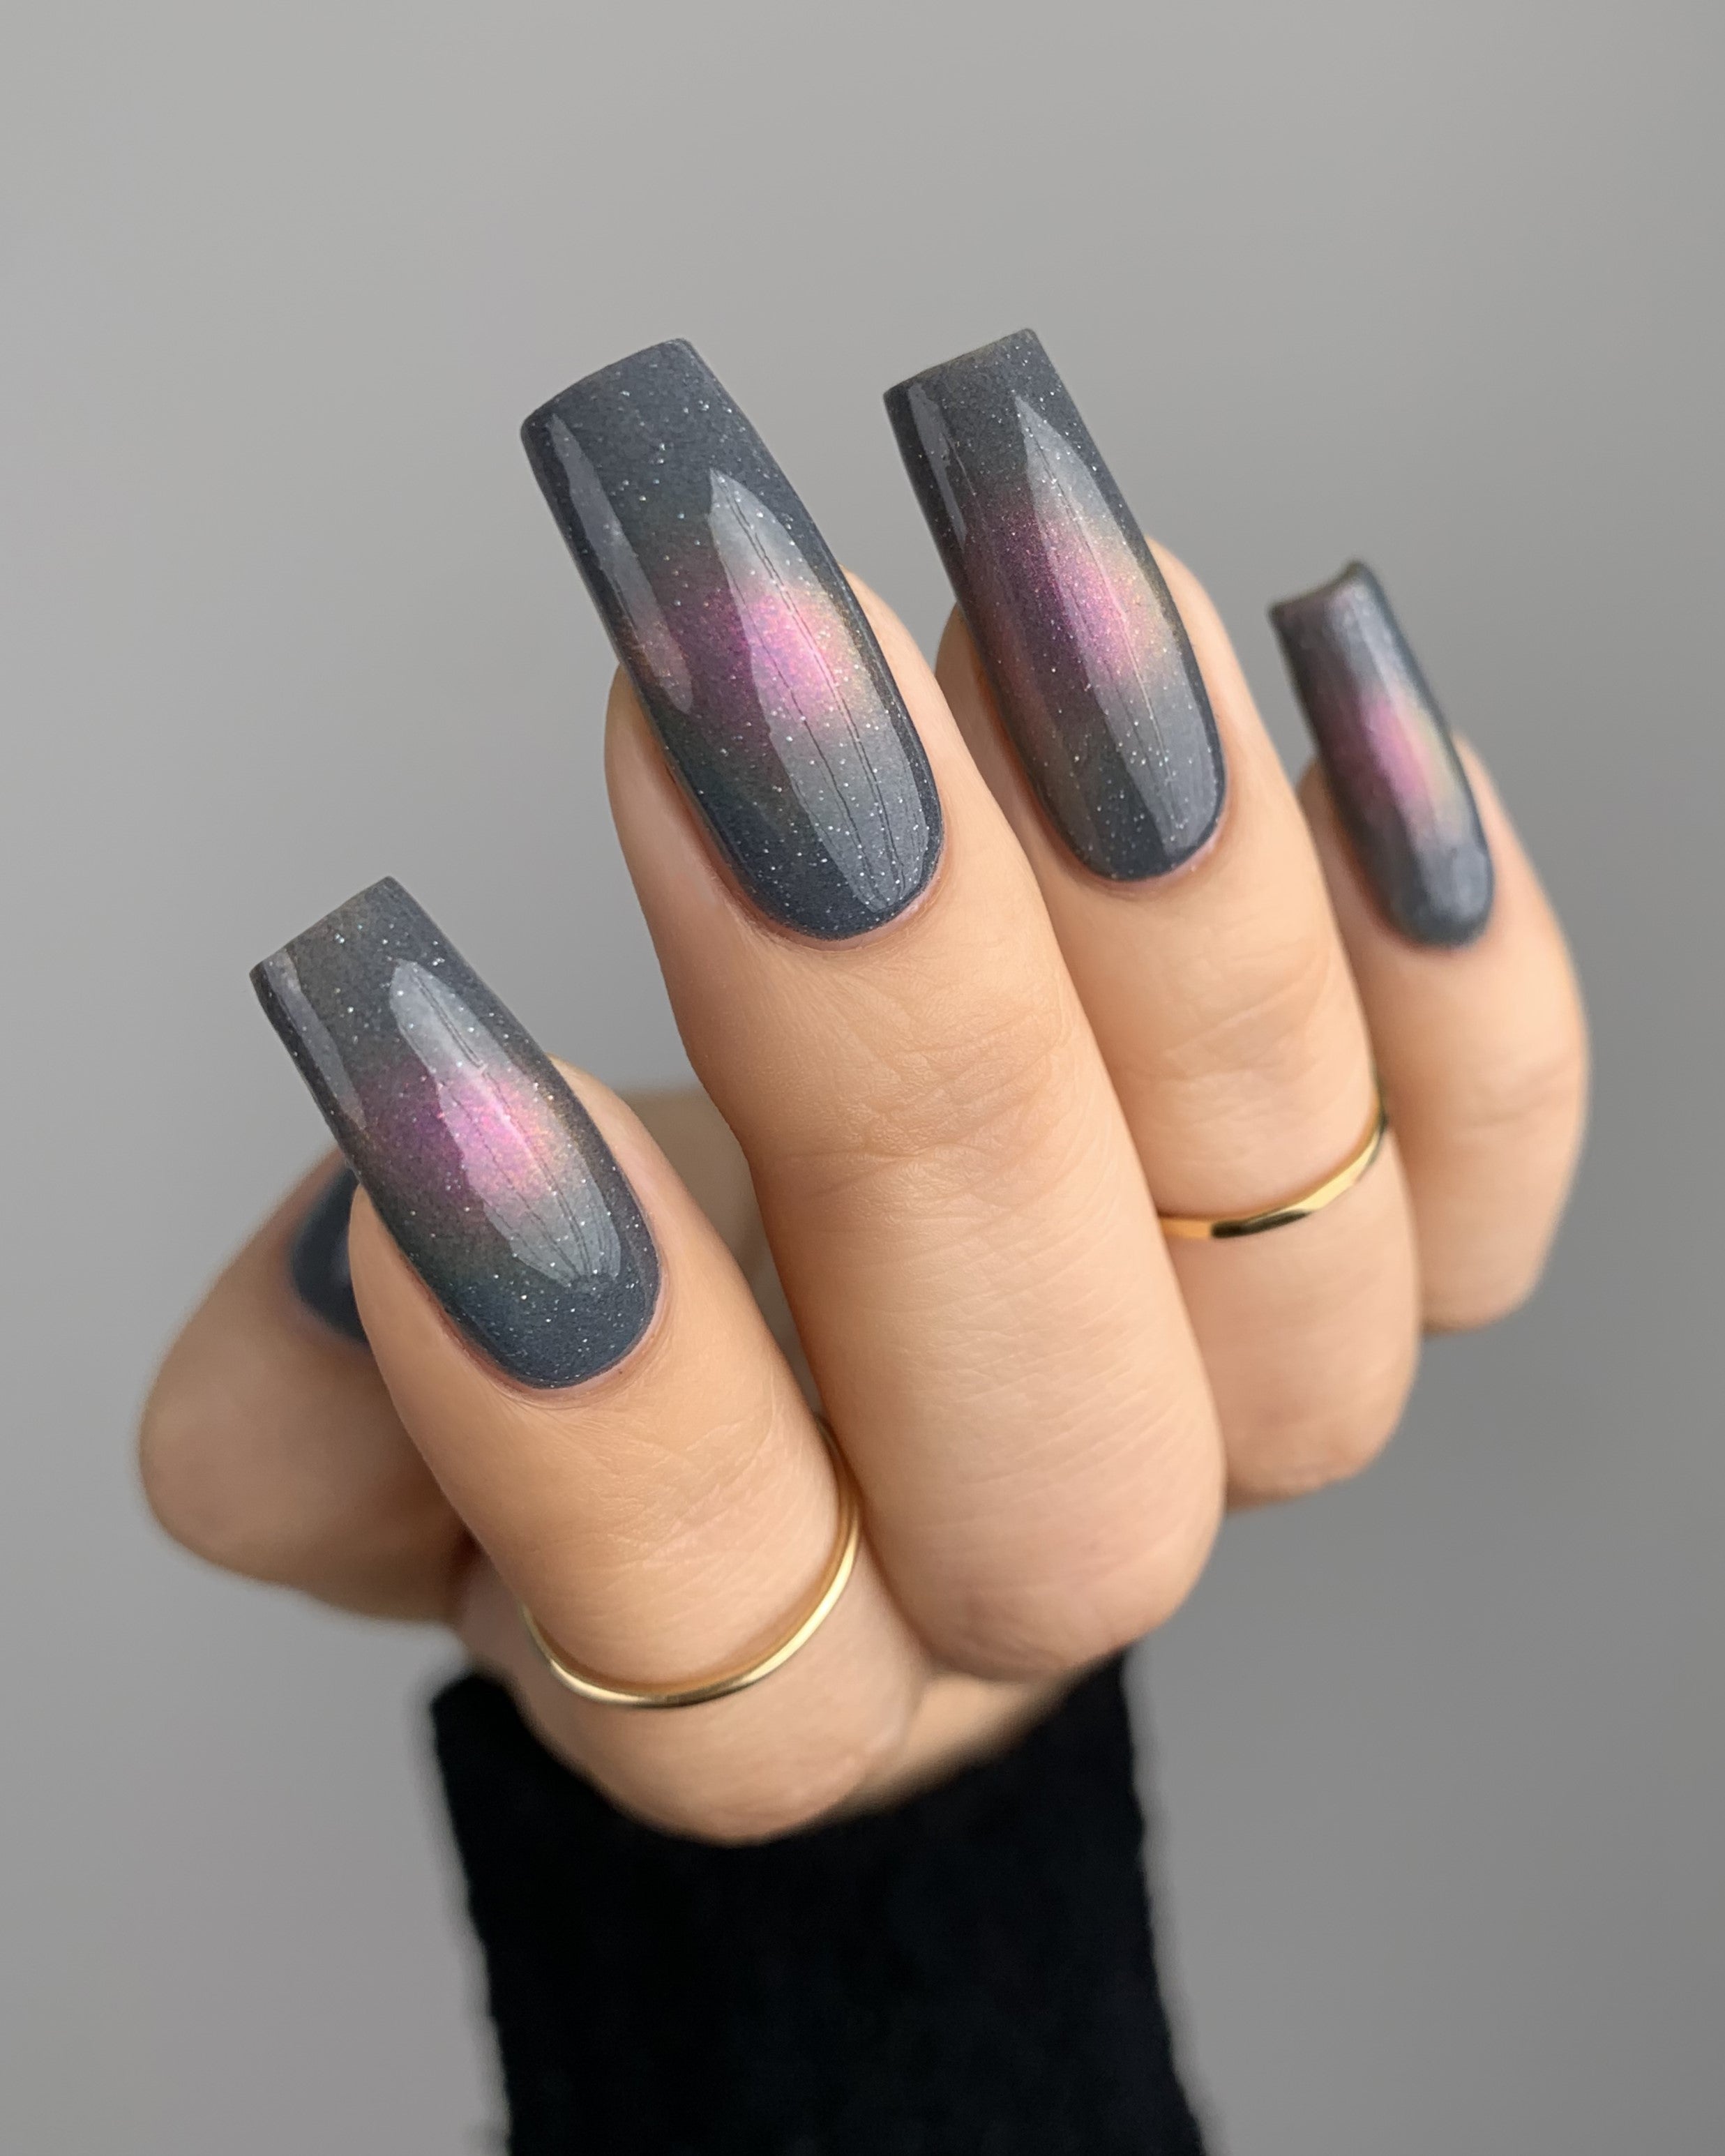 Popular Fall 2019 Nail Colors! | Pointy nails, Black ombre nails, Nails